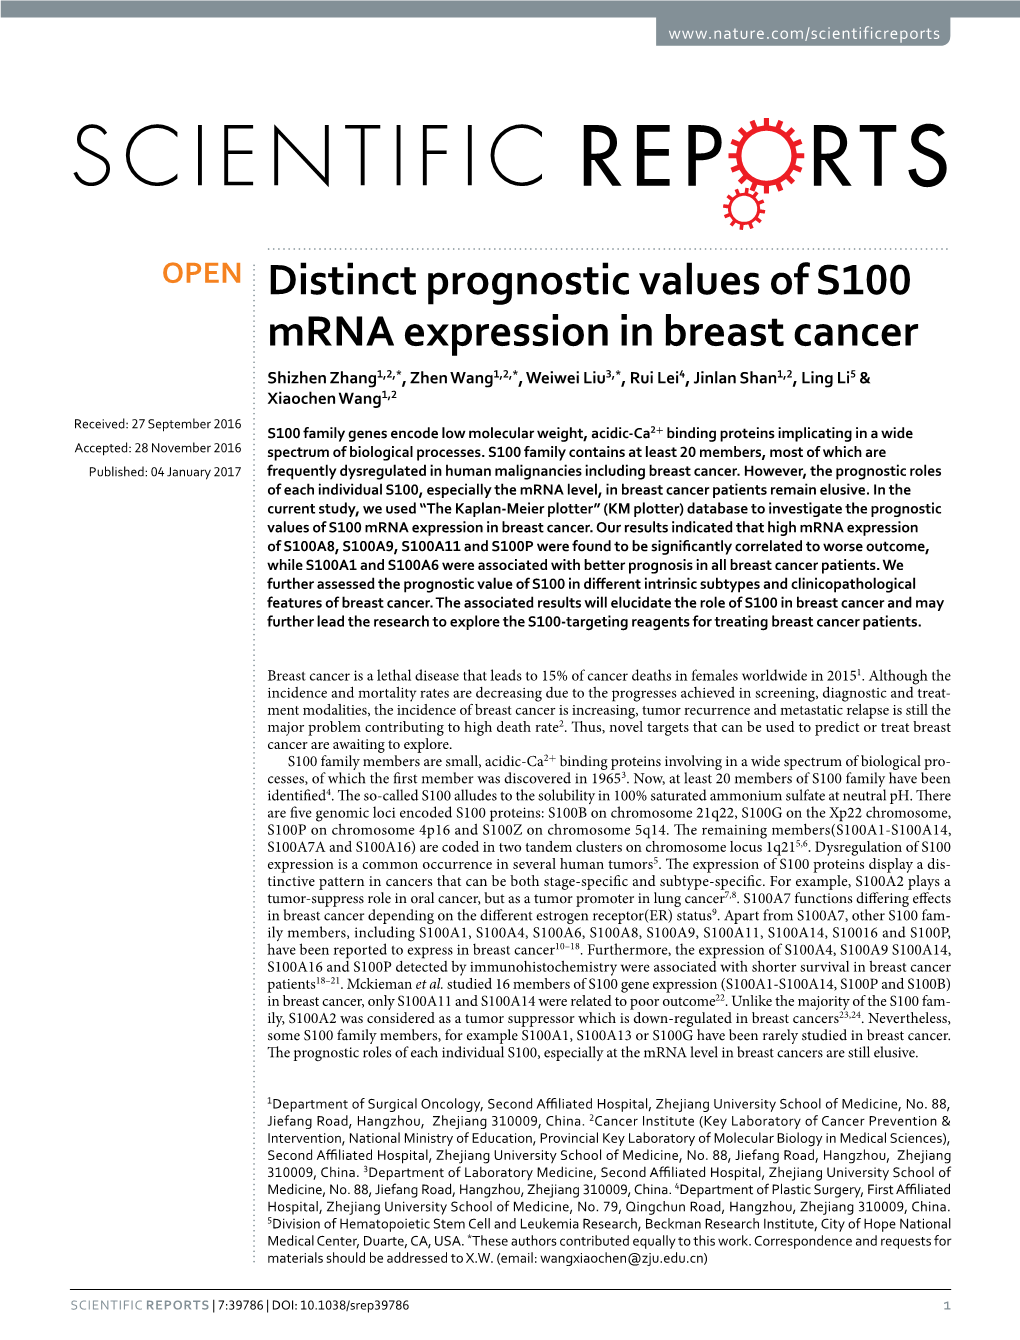 Distinct Prognostic Values of S100 Mrna Expression in Breast Cancer